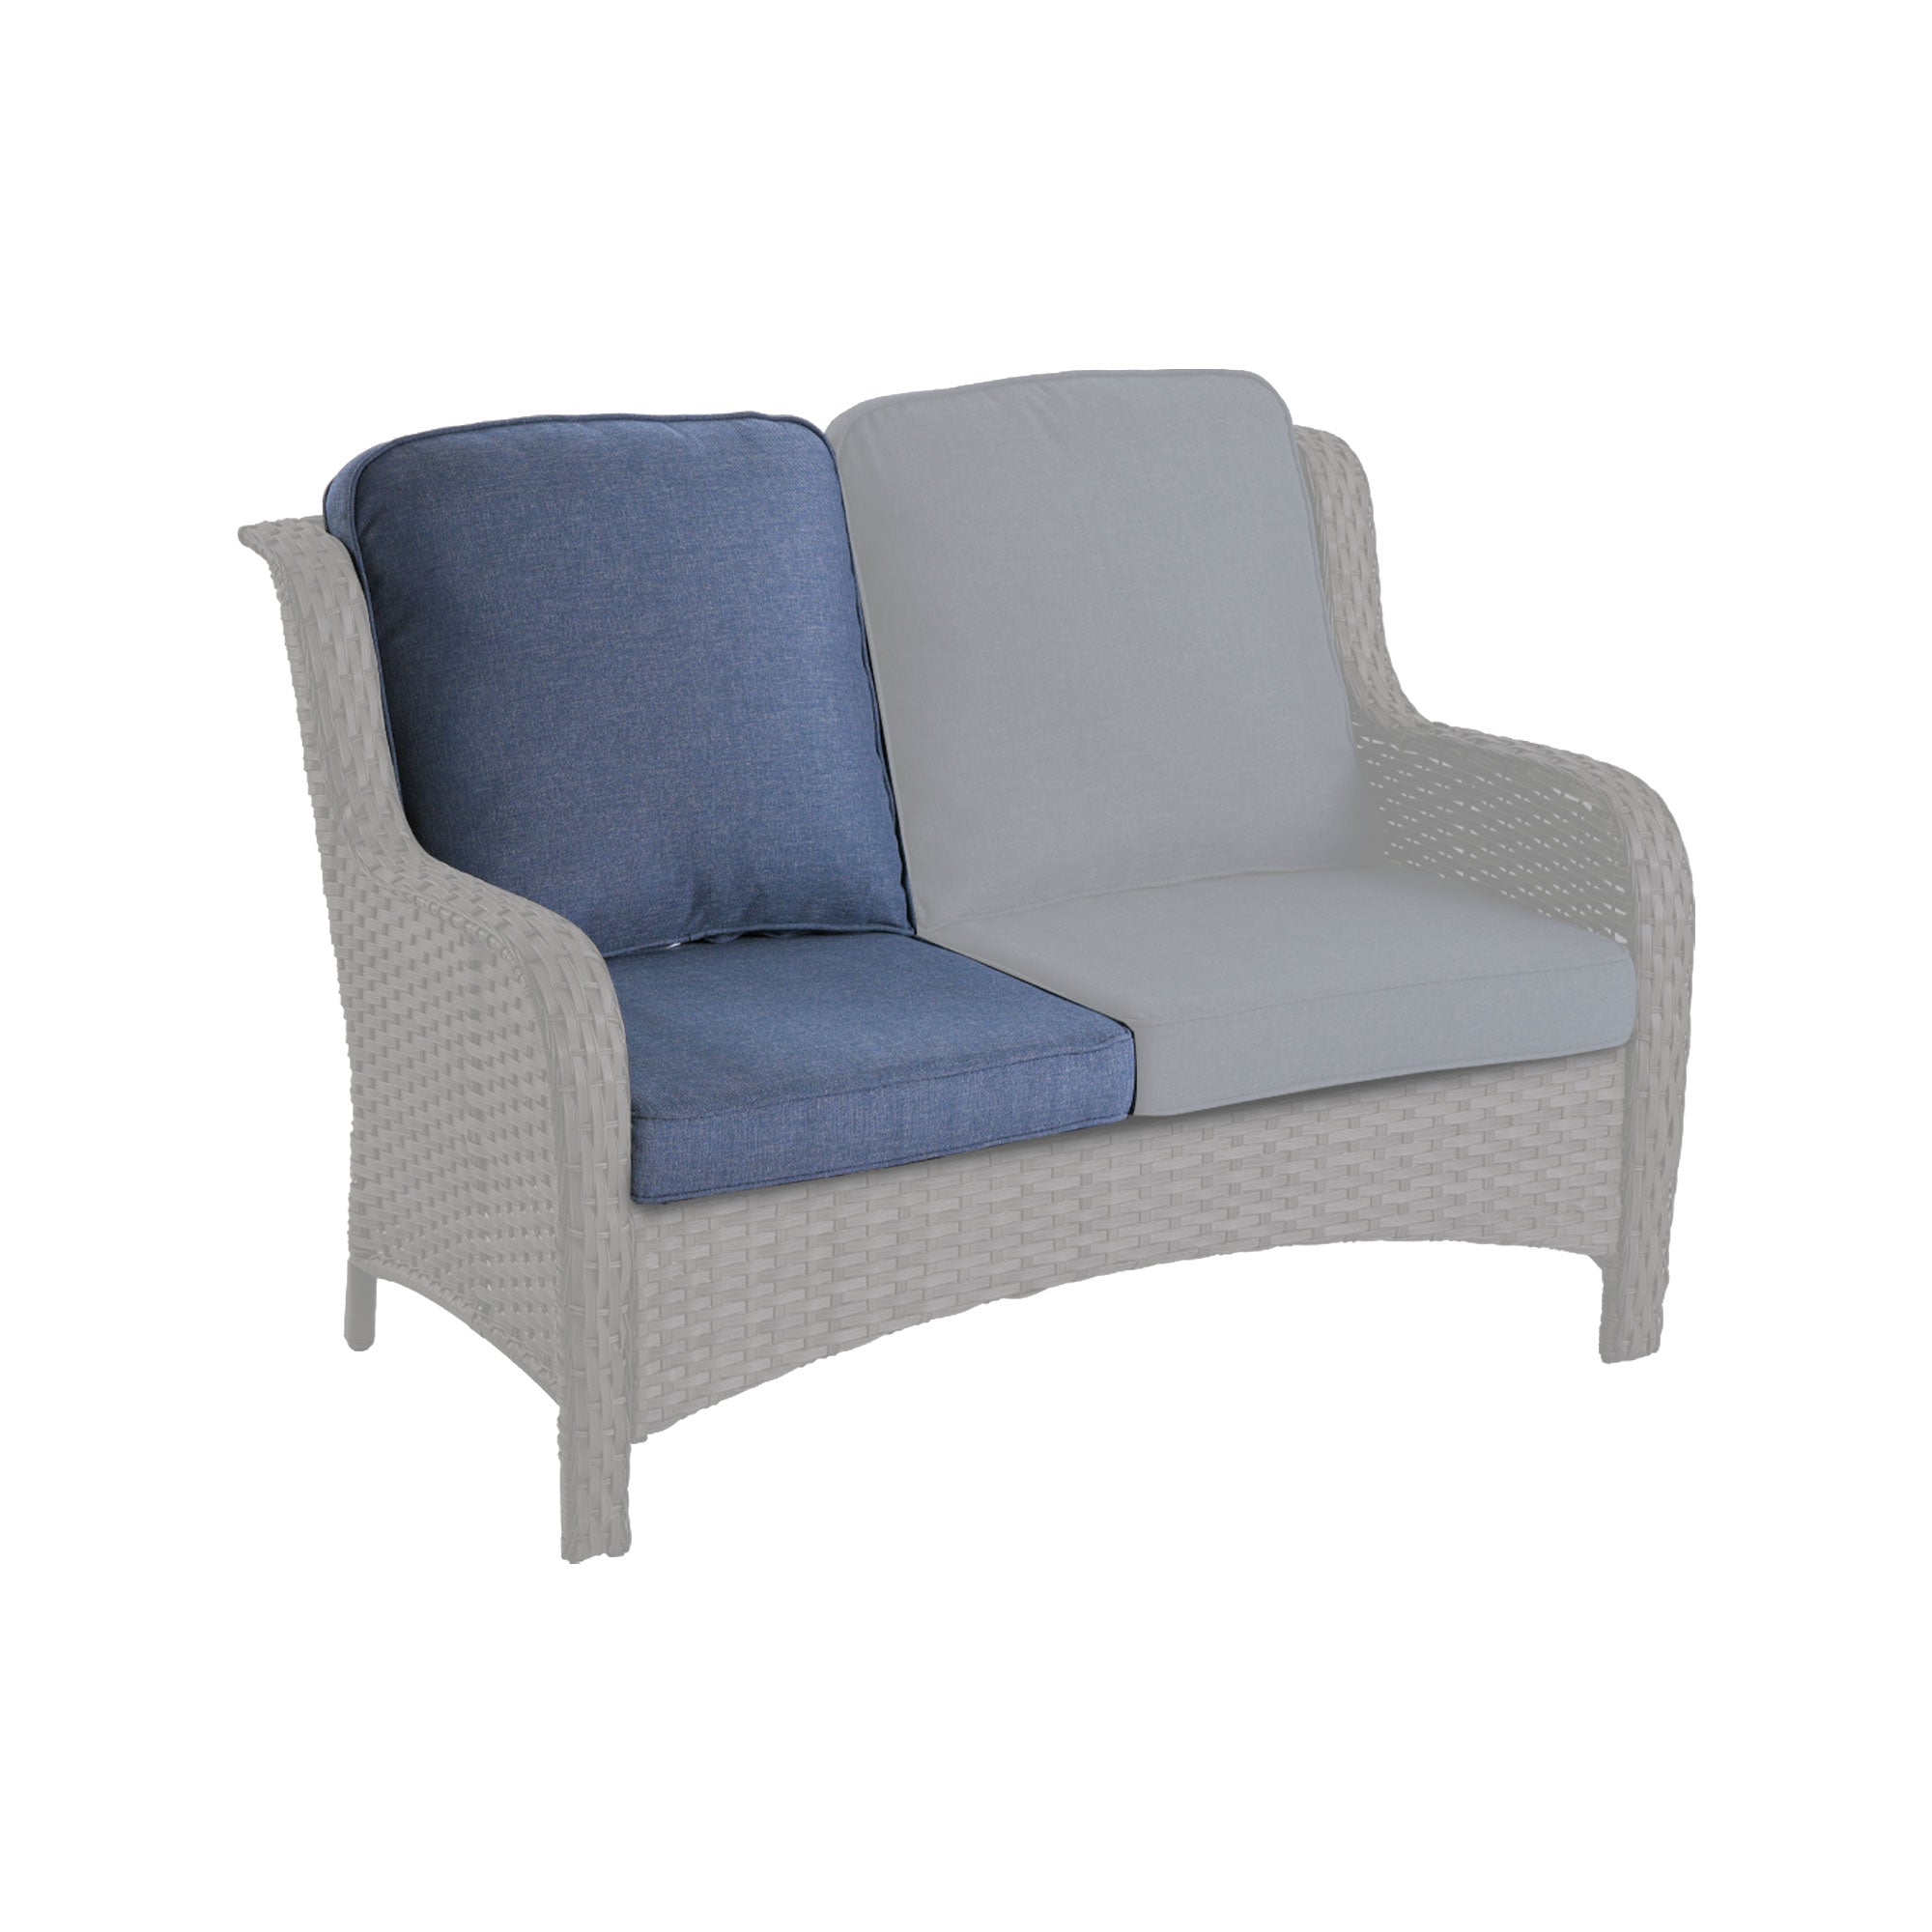 #Color_Denim Blue|Type_Seat&Back Cushion